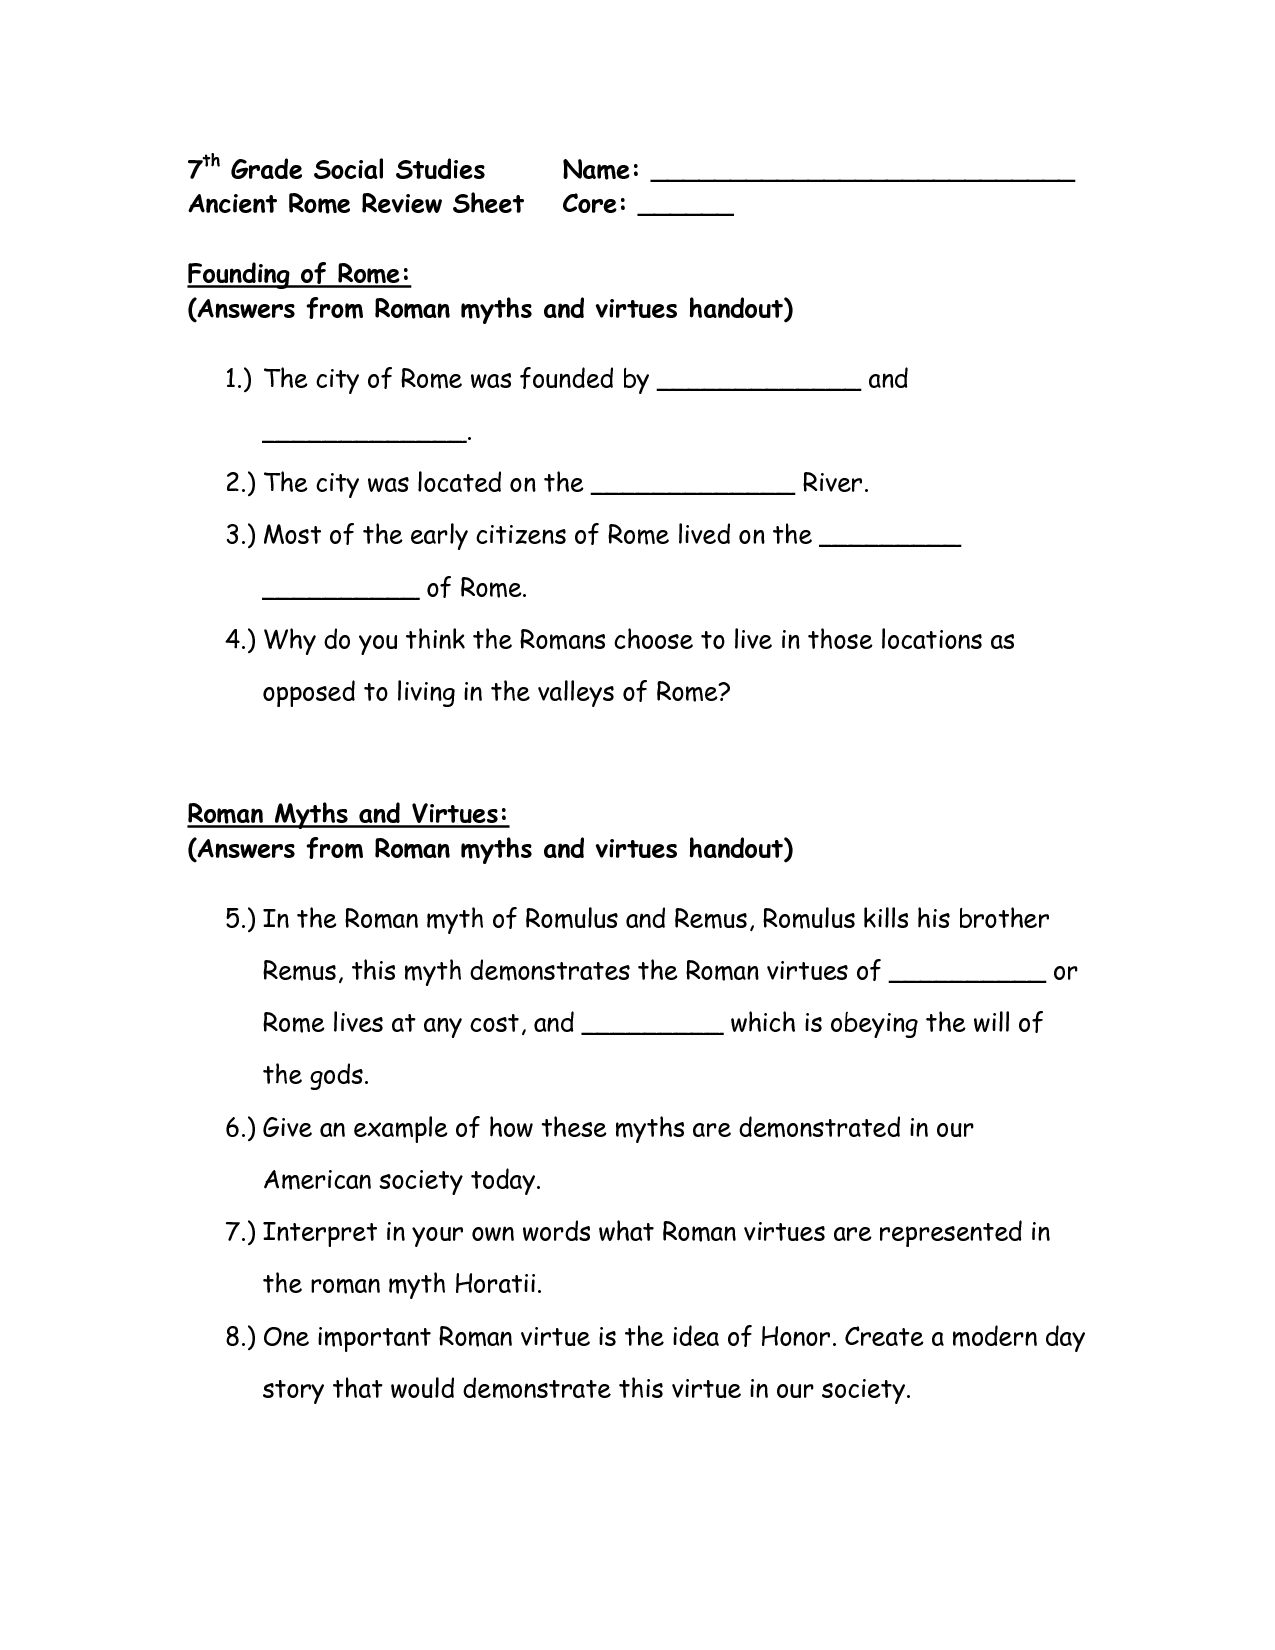 Third Grade Social Studies Worksheets Image